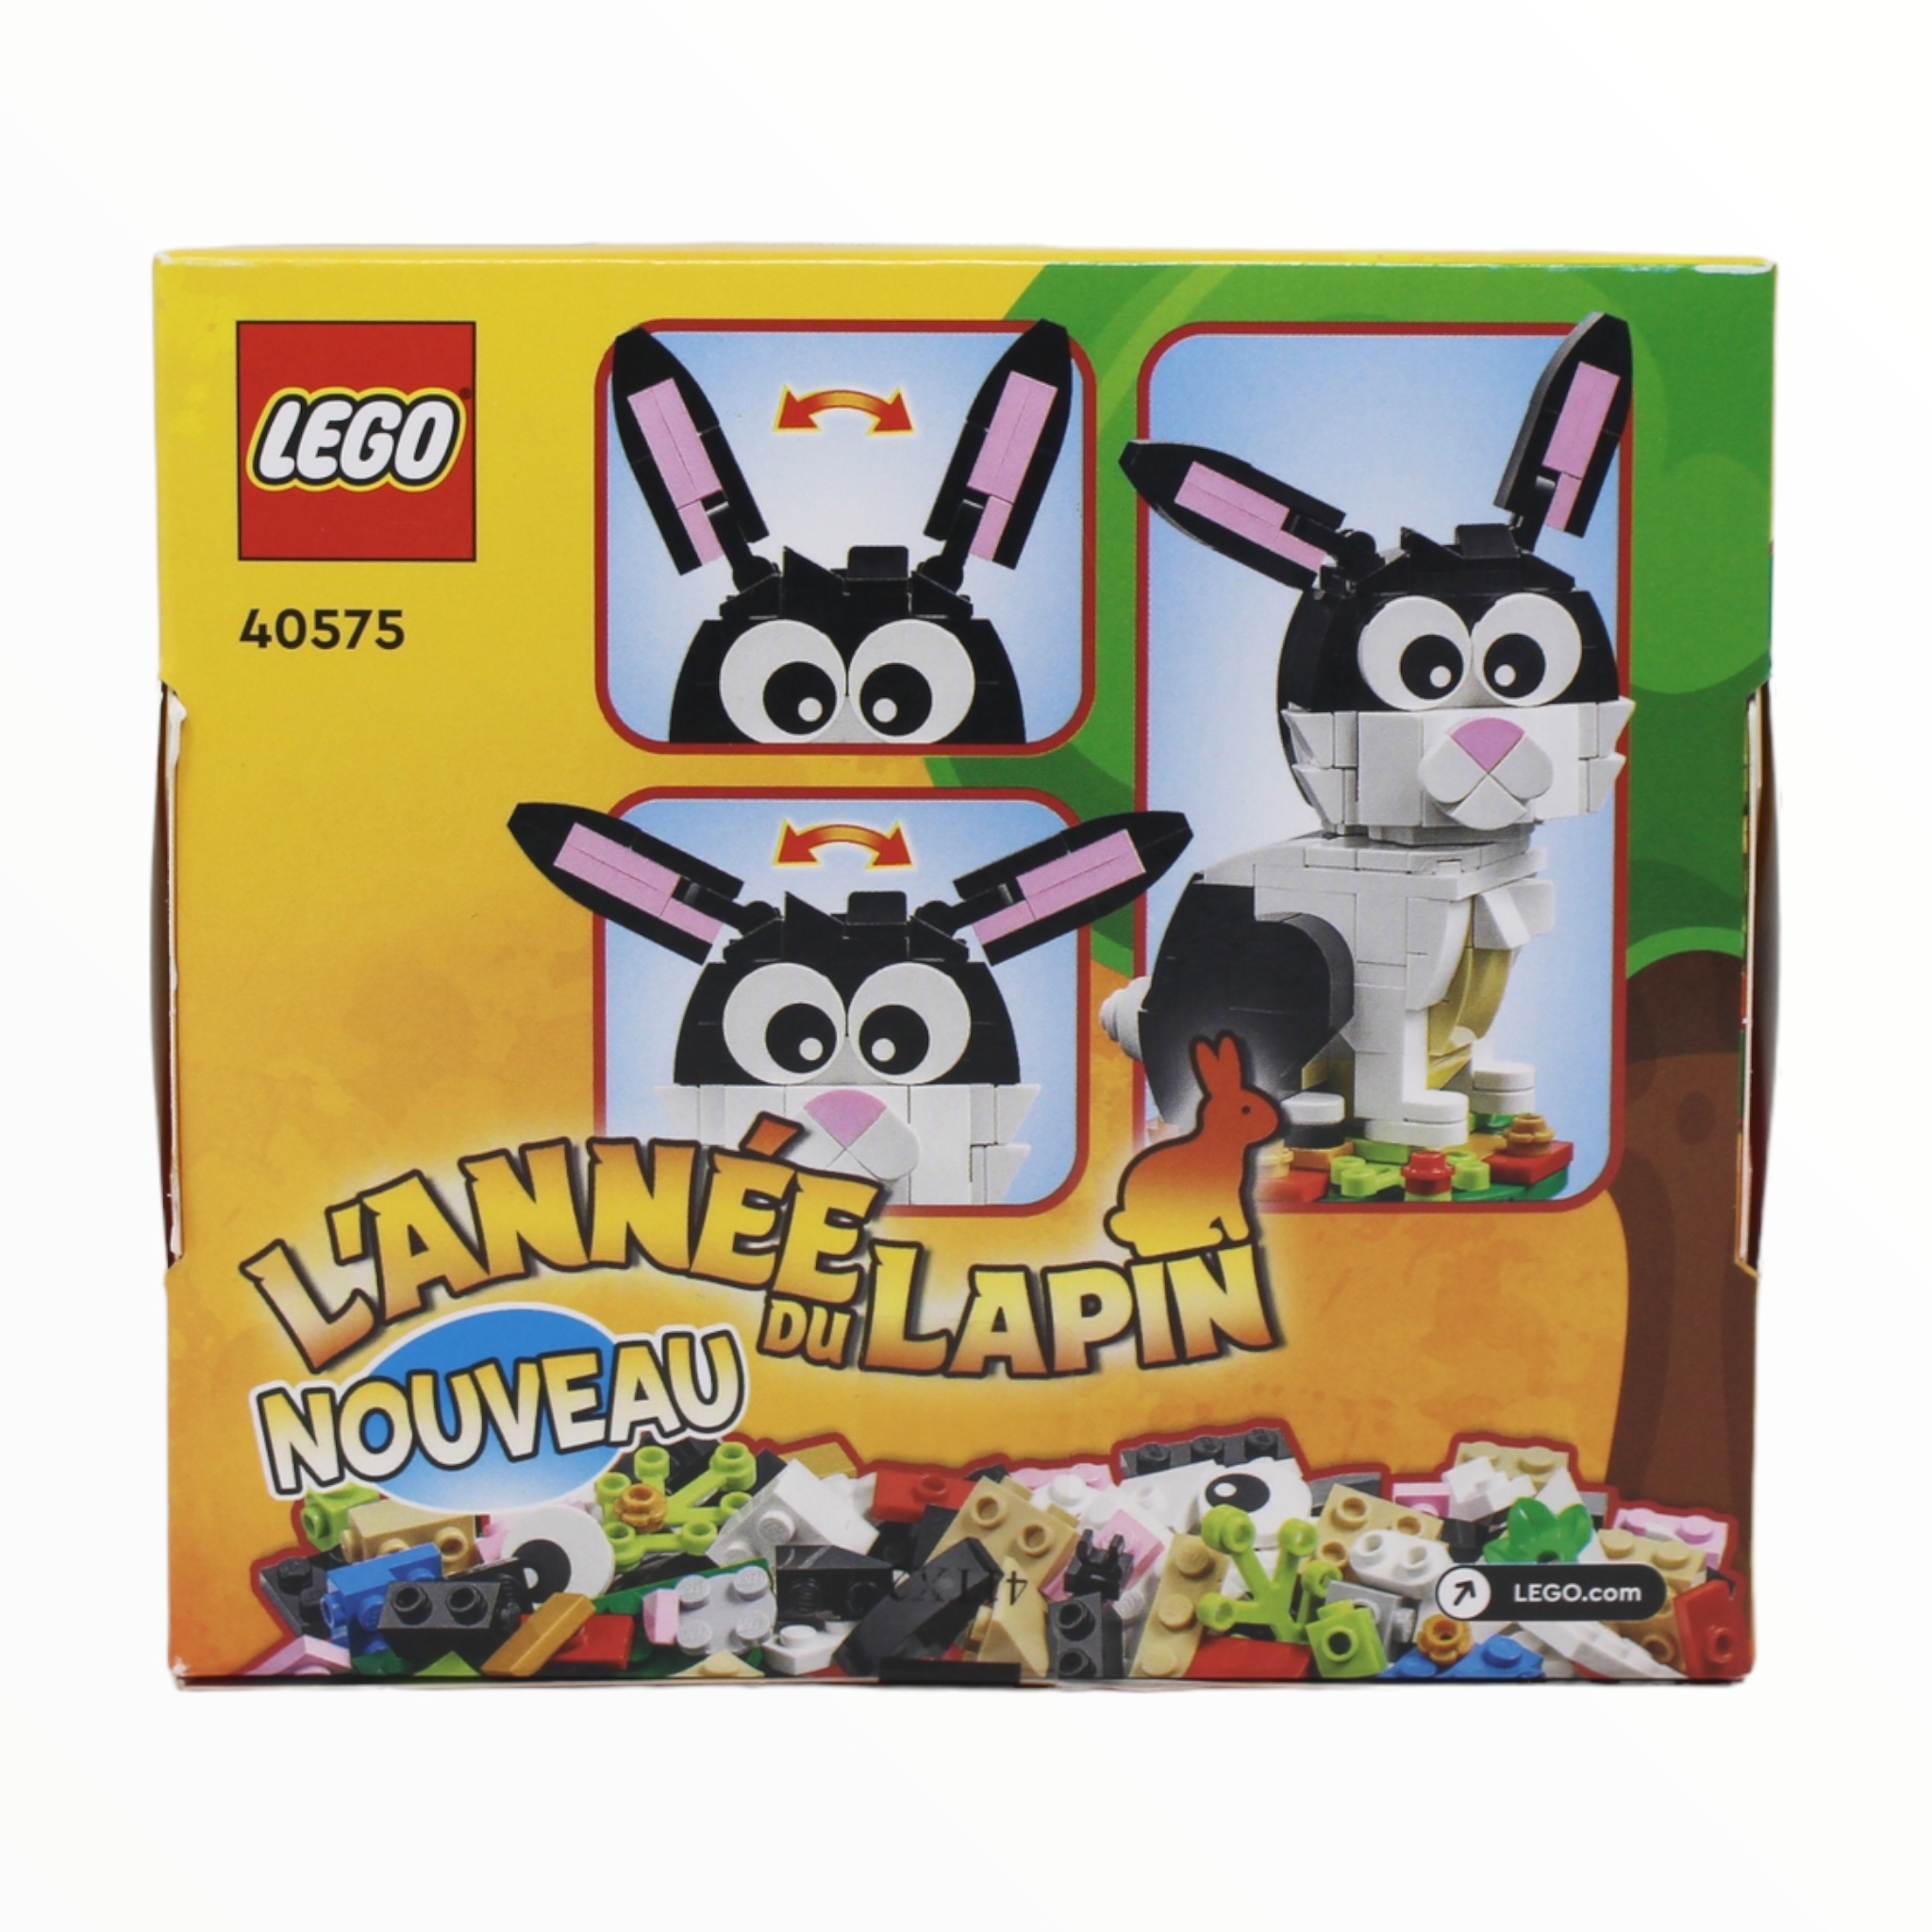 Retired Set 40575 LEGO Year of the Rabbit (2023)